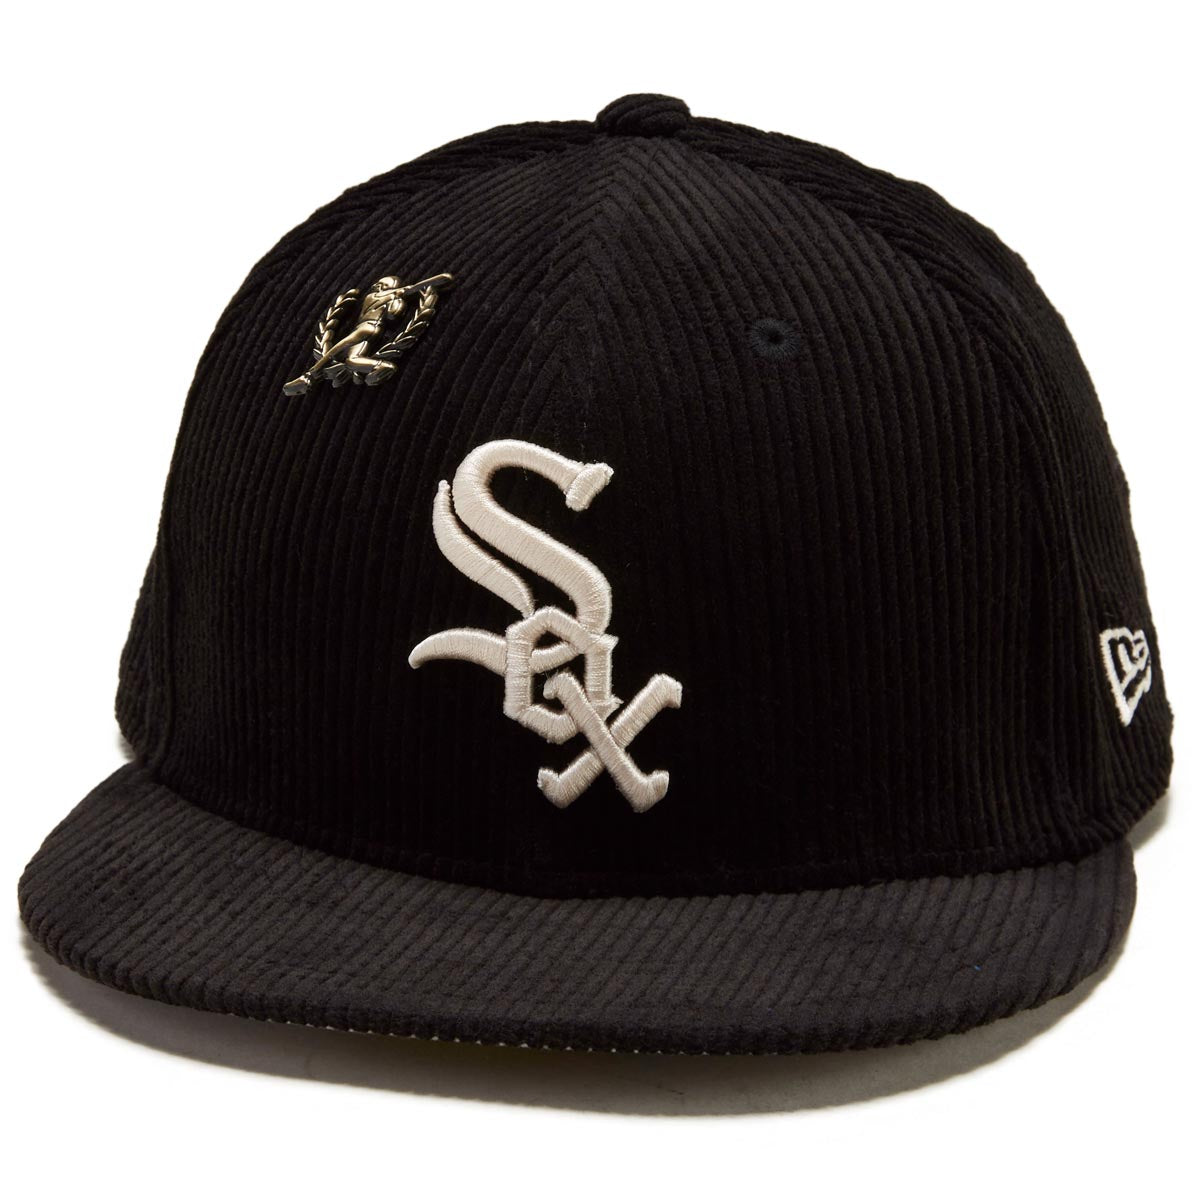 New Era 5950 Letterman Pin Hat - Chicago White Sox image 1